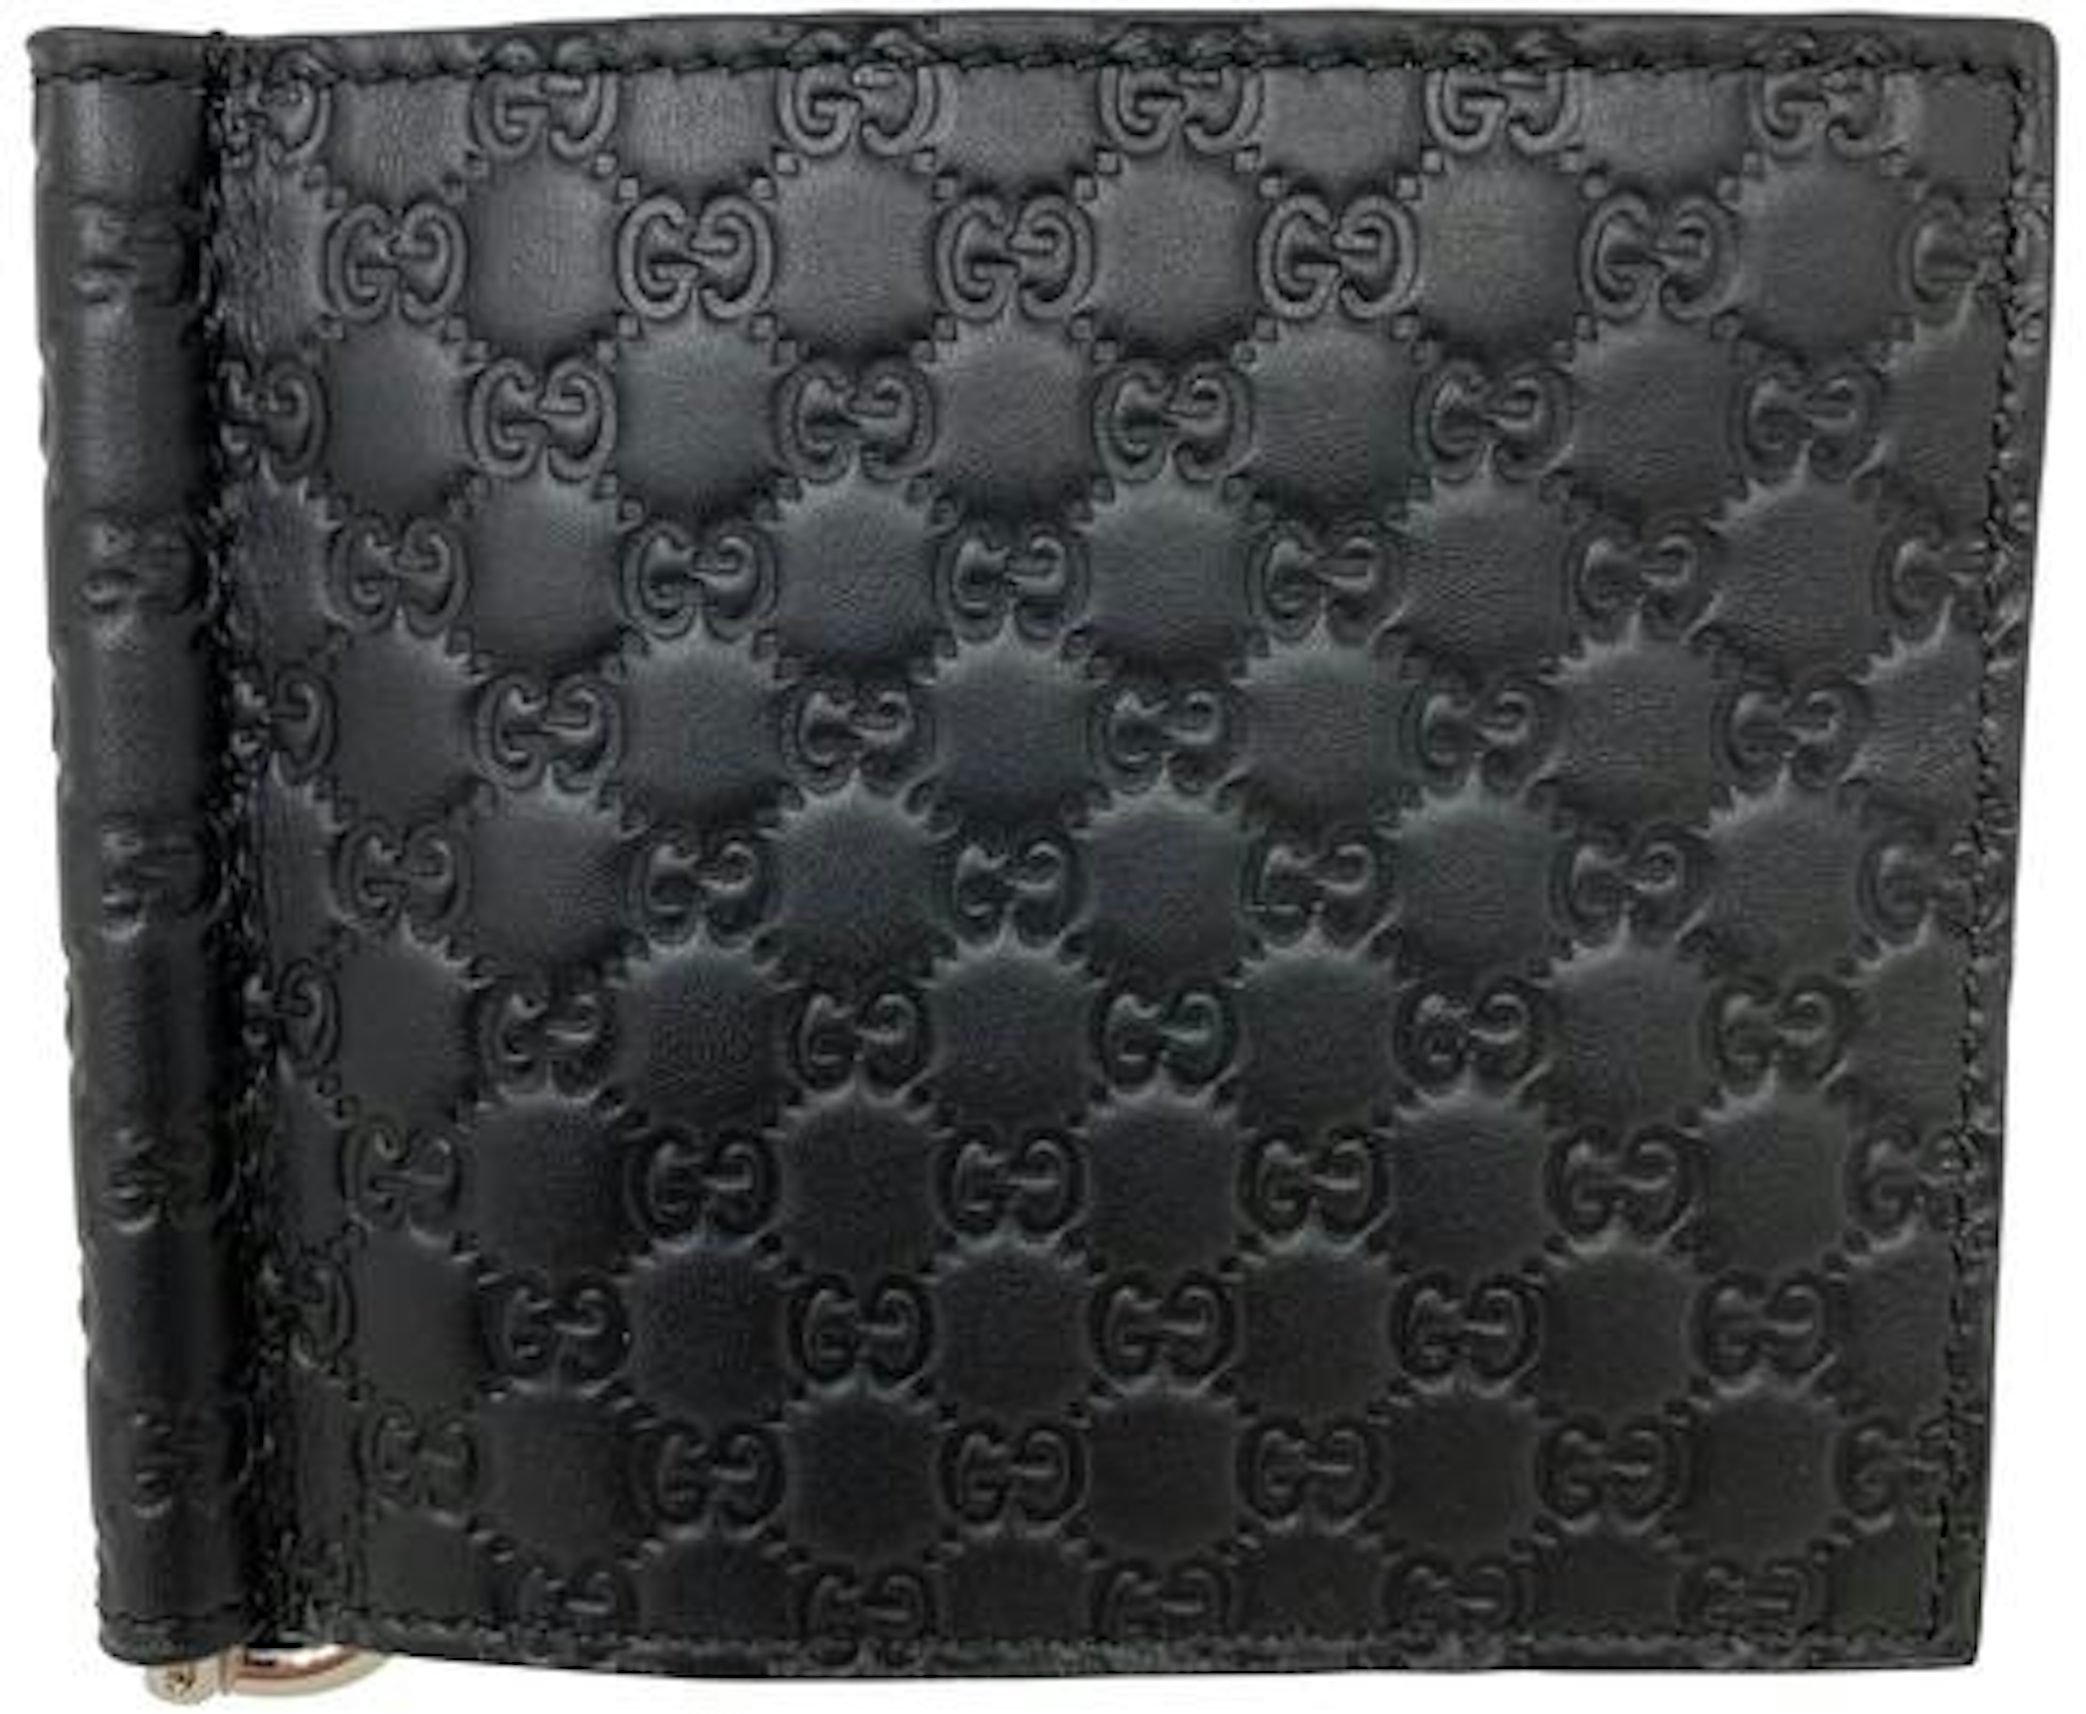 Jumbo GG money clip in black leather